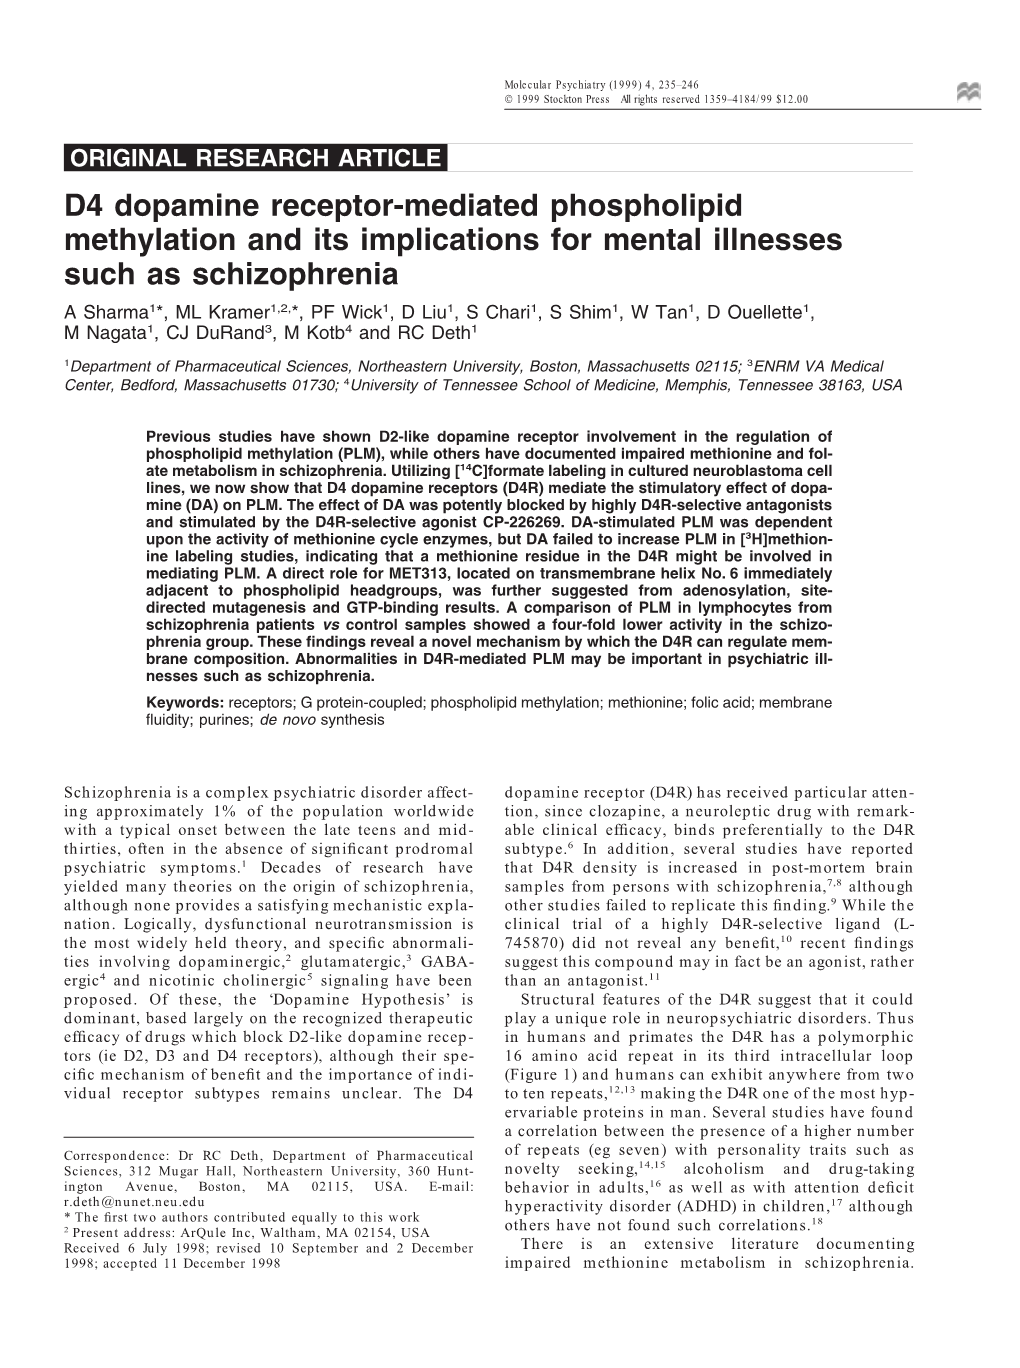 D4 Dopamine Receptor-Mediated Phospholipid Methylation and Its